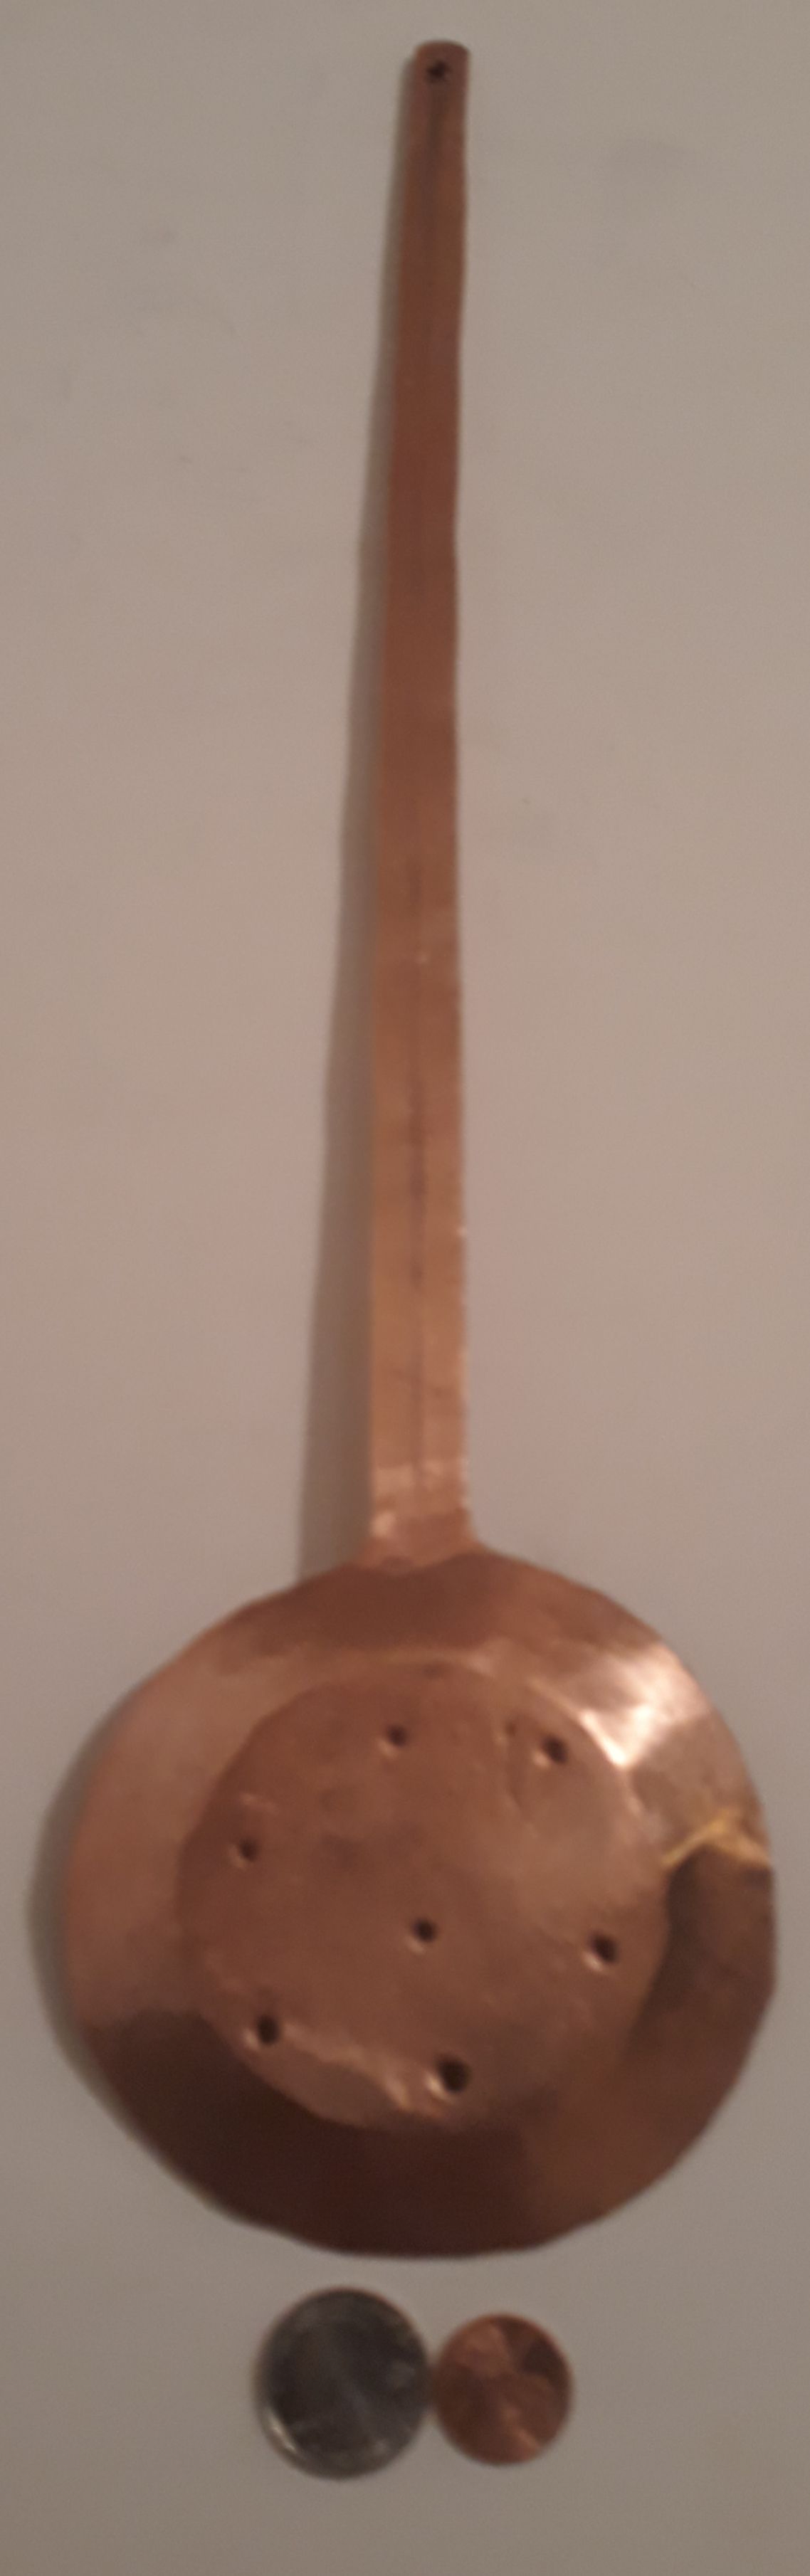 Vintage Metal Copper Strainer, Heavy Duty, Quality Copper Strainer Utensil, 16 1/2" Long, Kitchen Decor, Hanging Display, Shelf Display